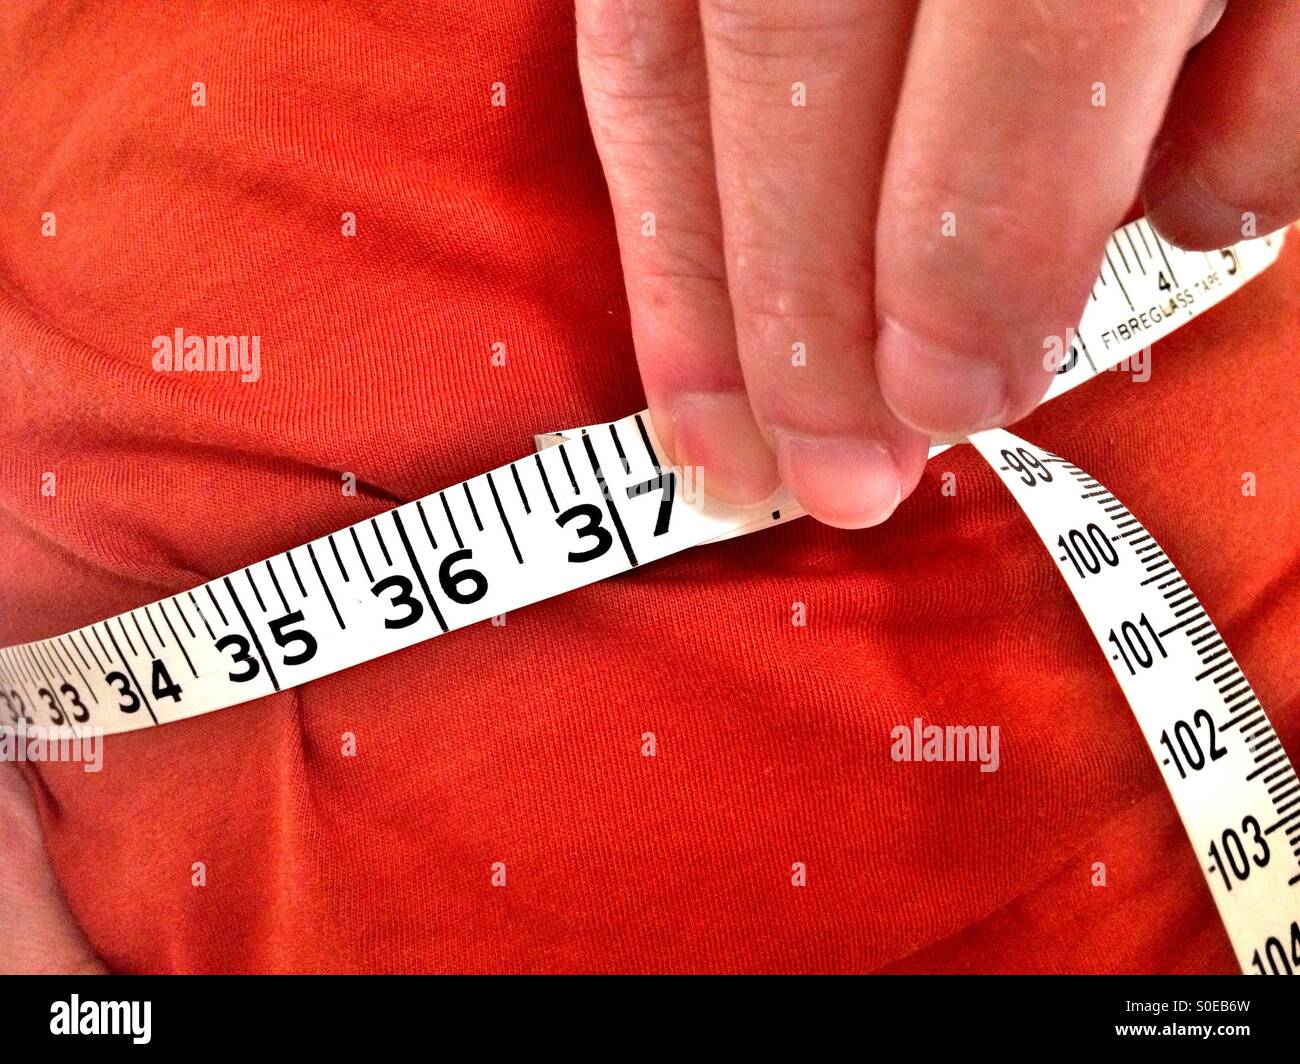 Man taking his waist measurement Stock Photo